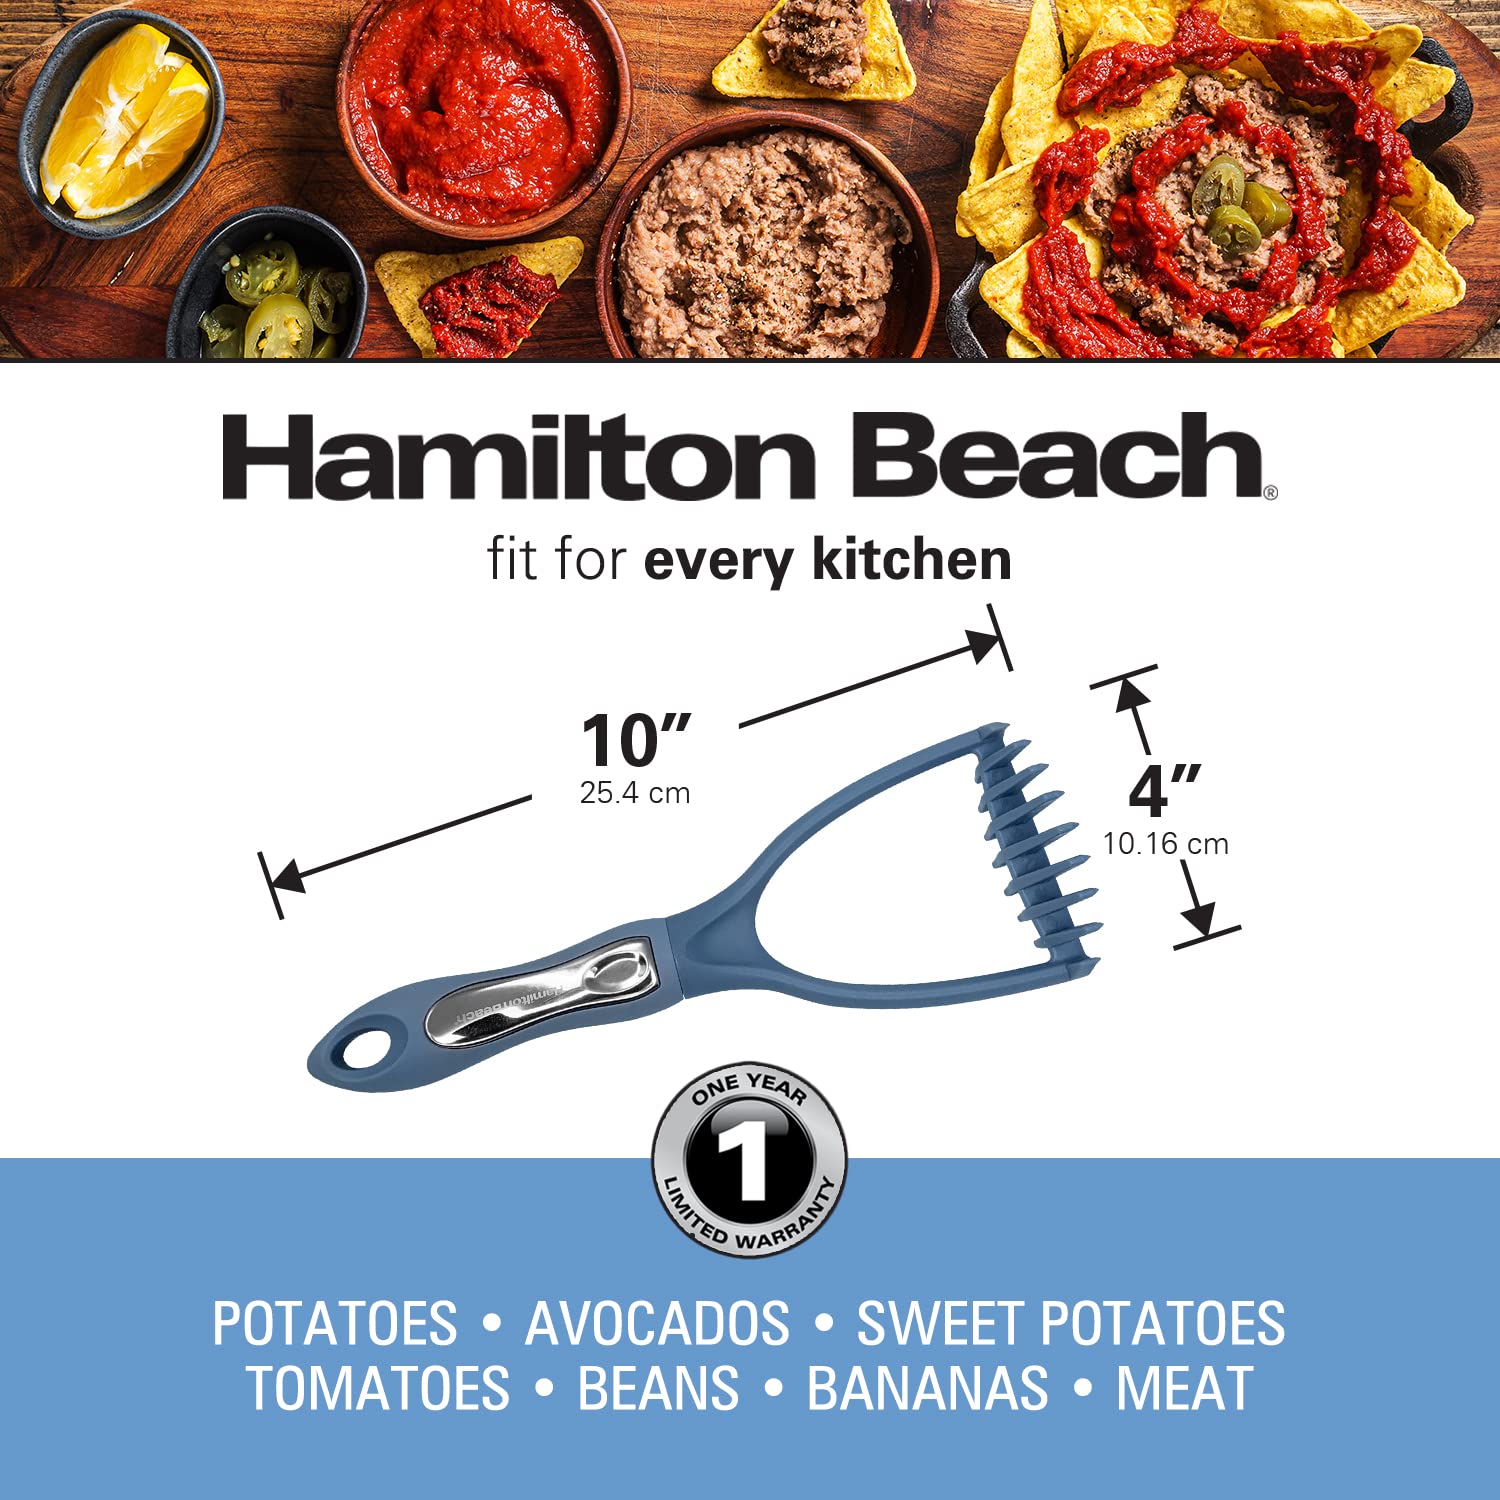 Hamilton Beach Potato Masher Soft Touch Handle and Comfortable Grip, D